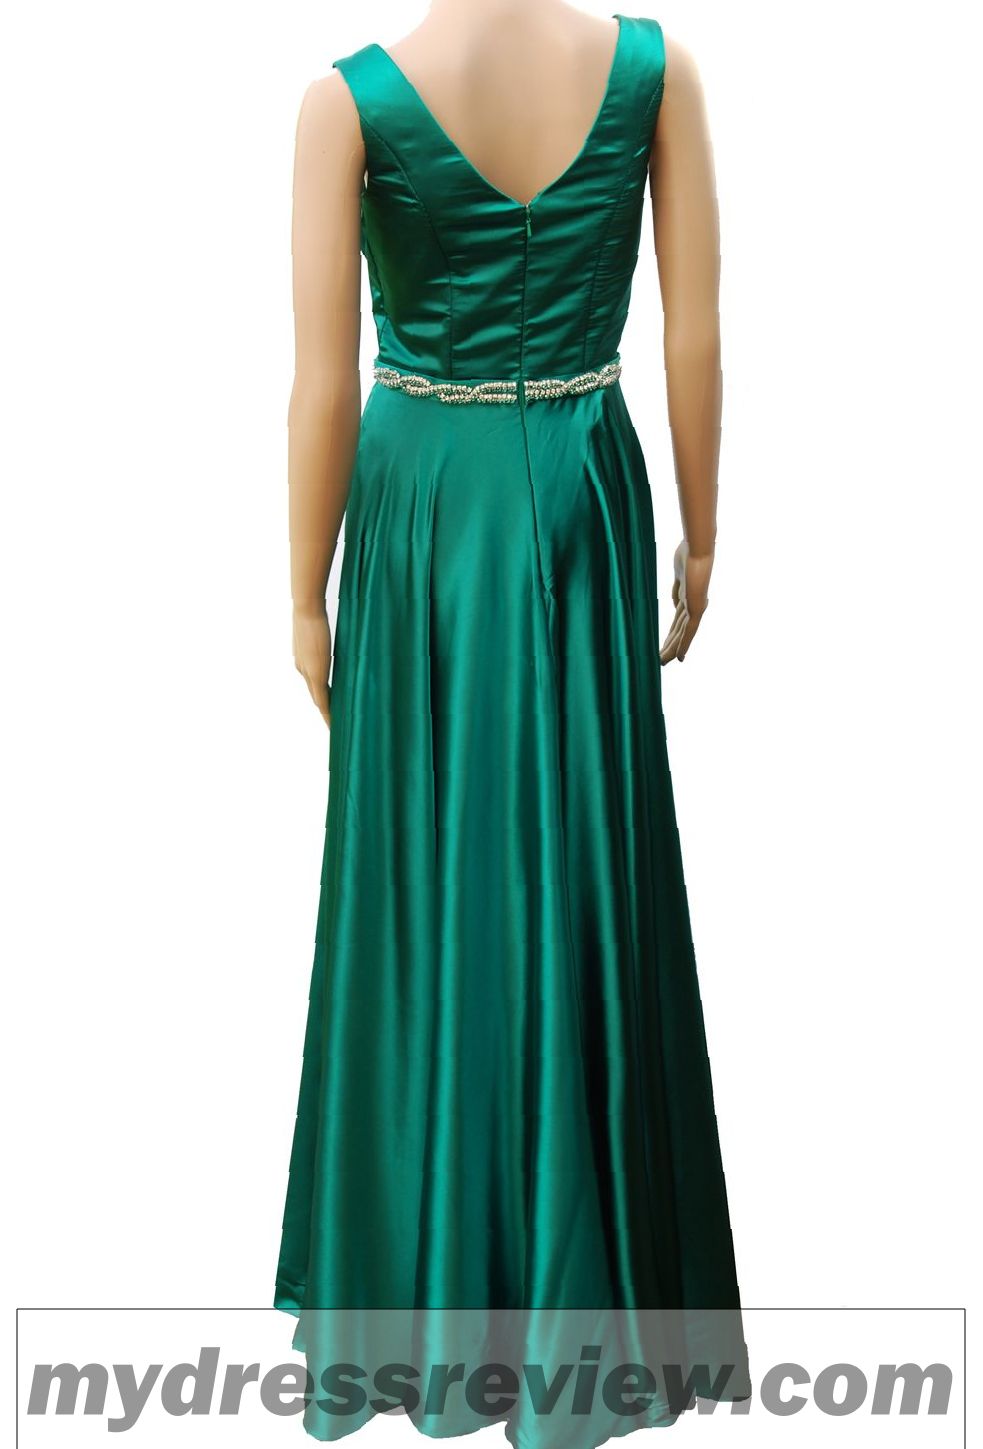 Satin Emerald Green Dress : Oscar Fashion Review